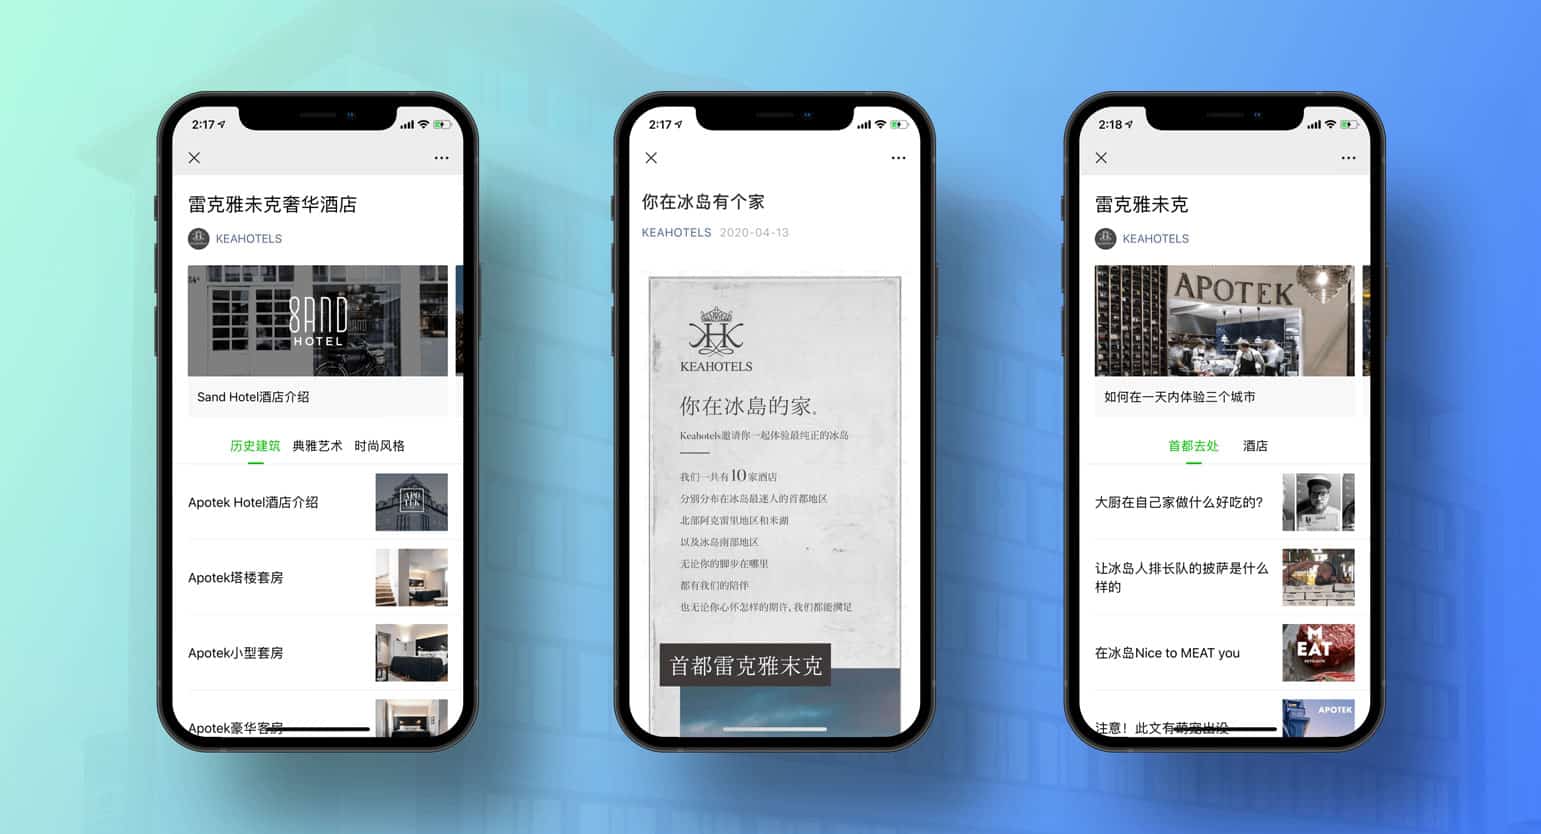 Keahotels WeChat officiella kontosidor